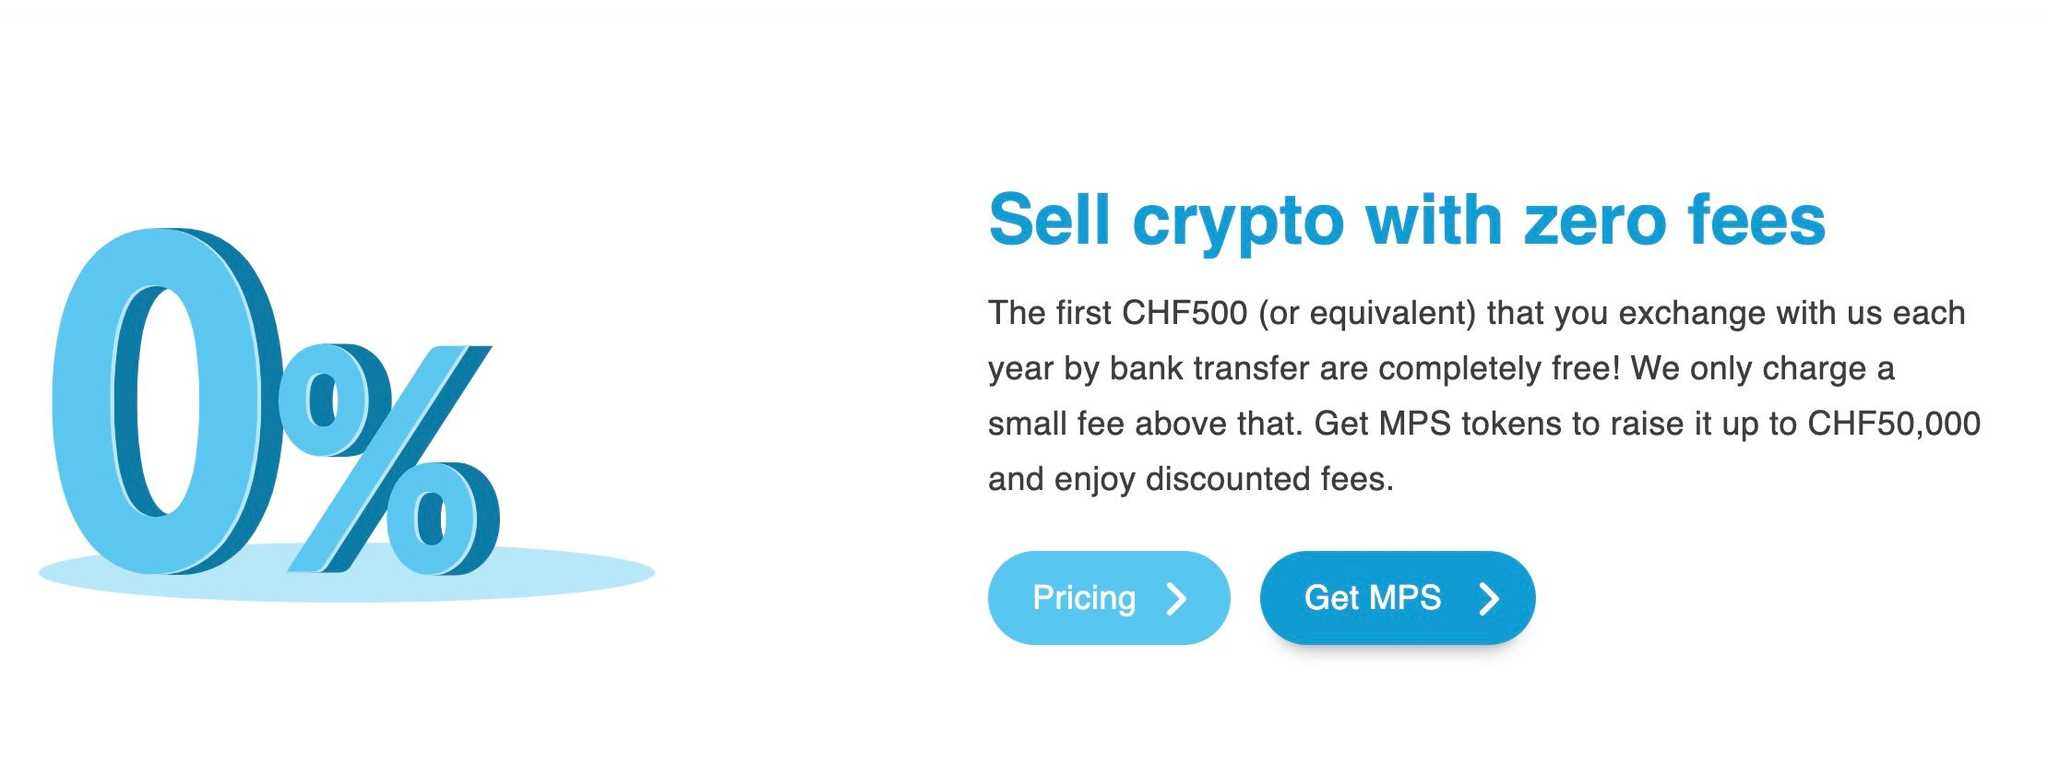 sell crypto.jpg